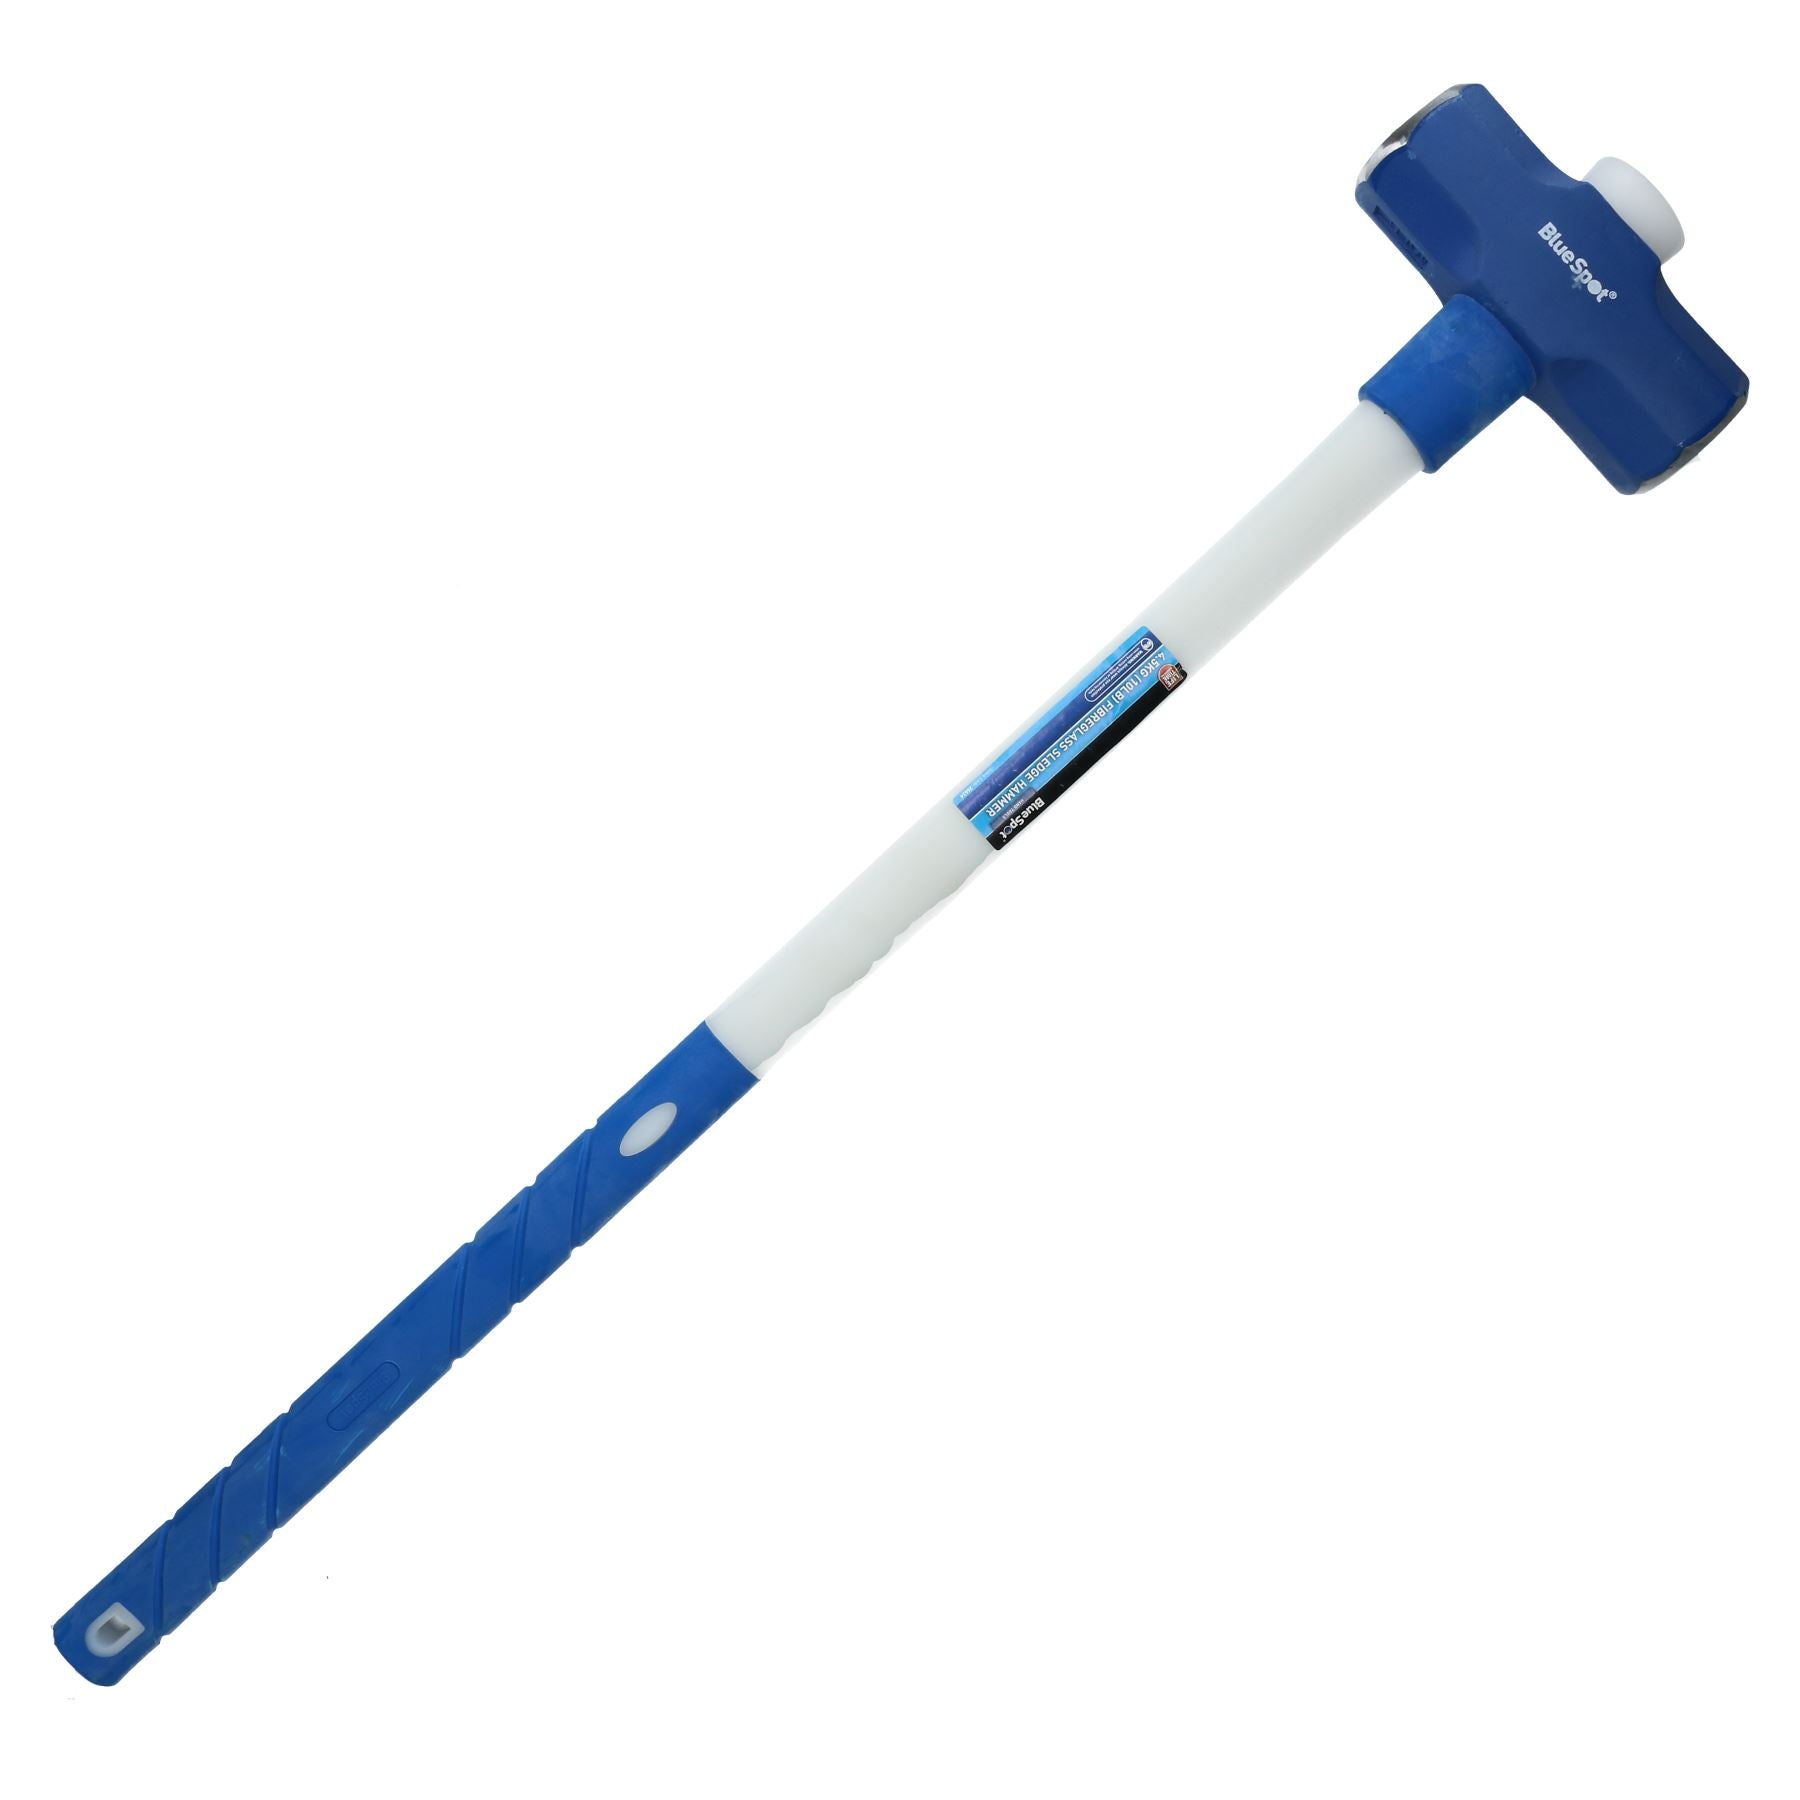 10Lb / 4.5Kg Sledge Hammer With Fibreglass TPR Handle Demolition Post Driving